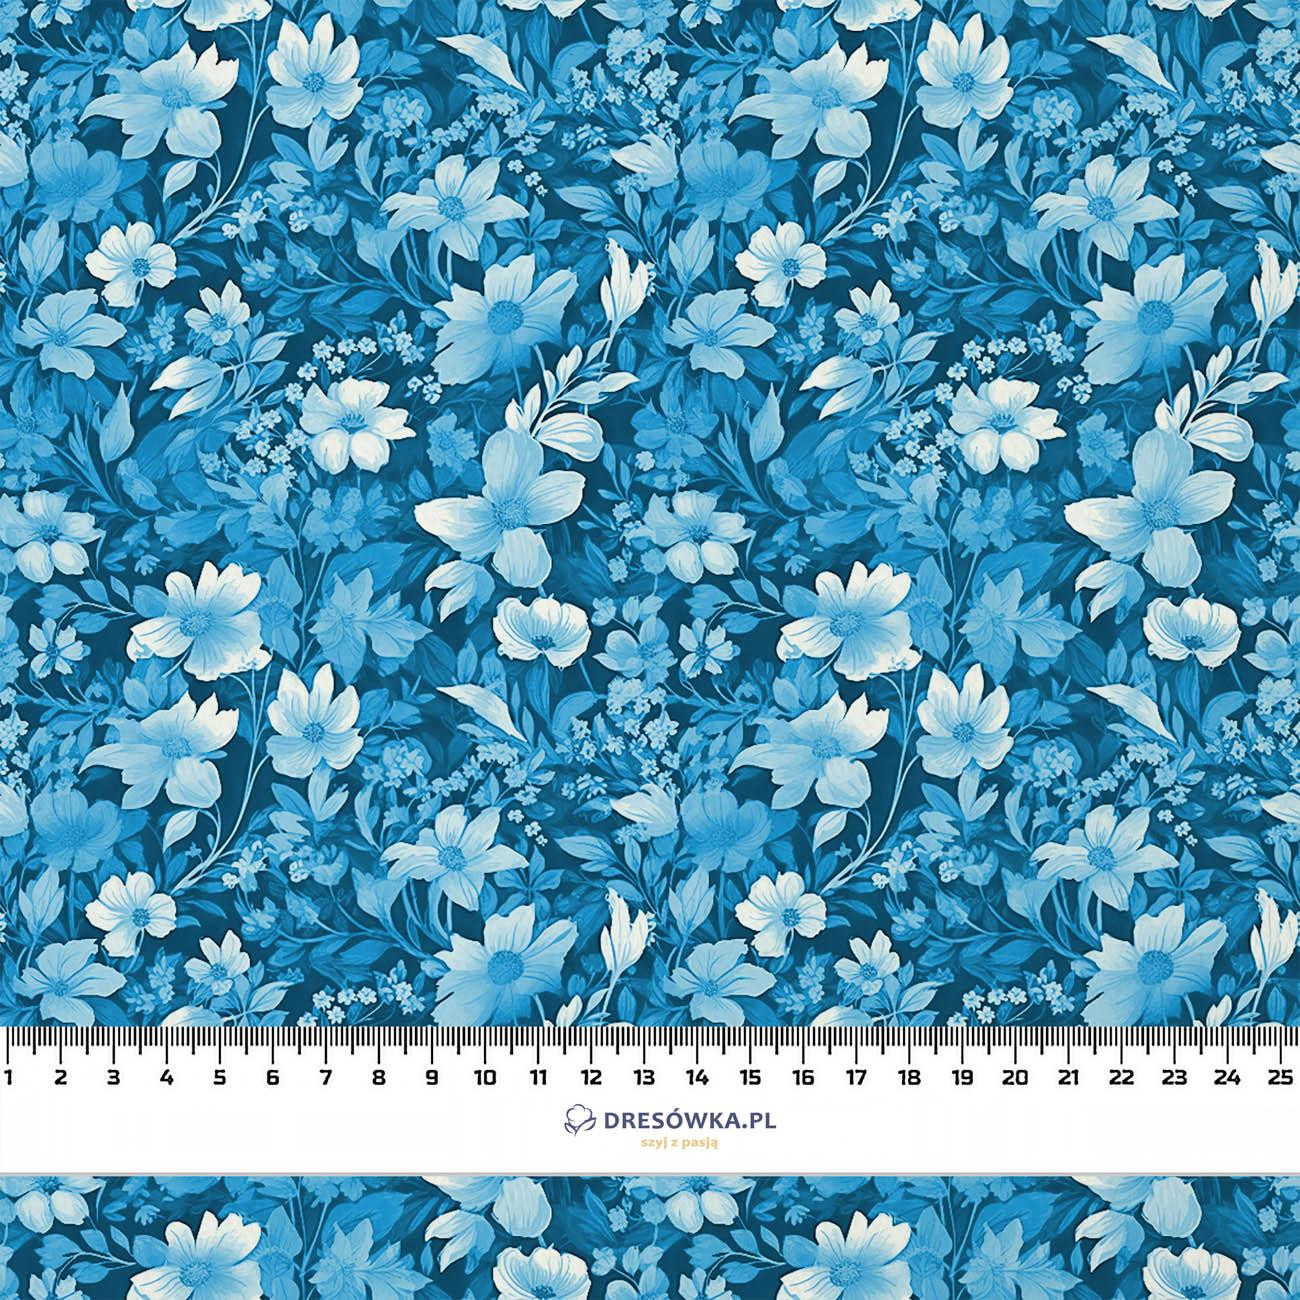 TRANQUIL BLUE / FLOWERS - Waterproof woven fabric